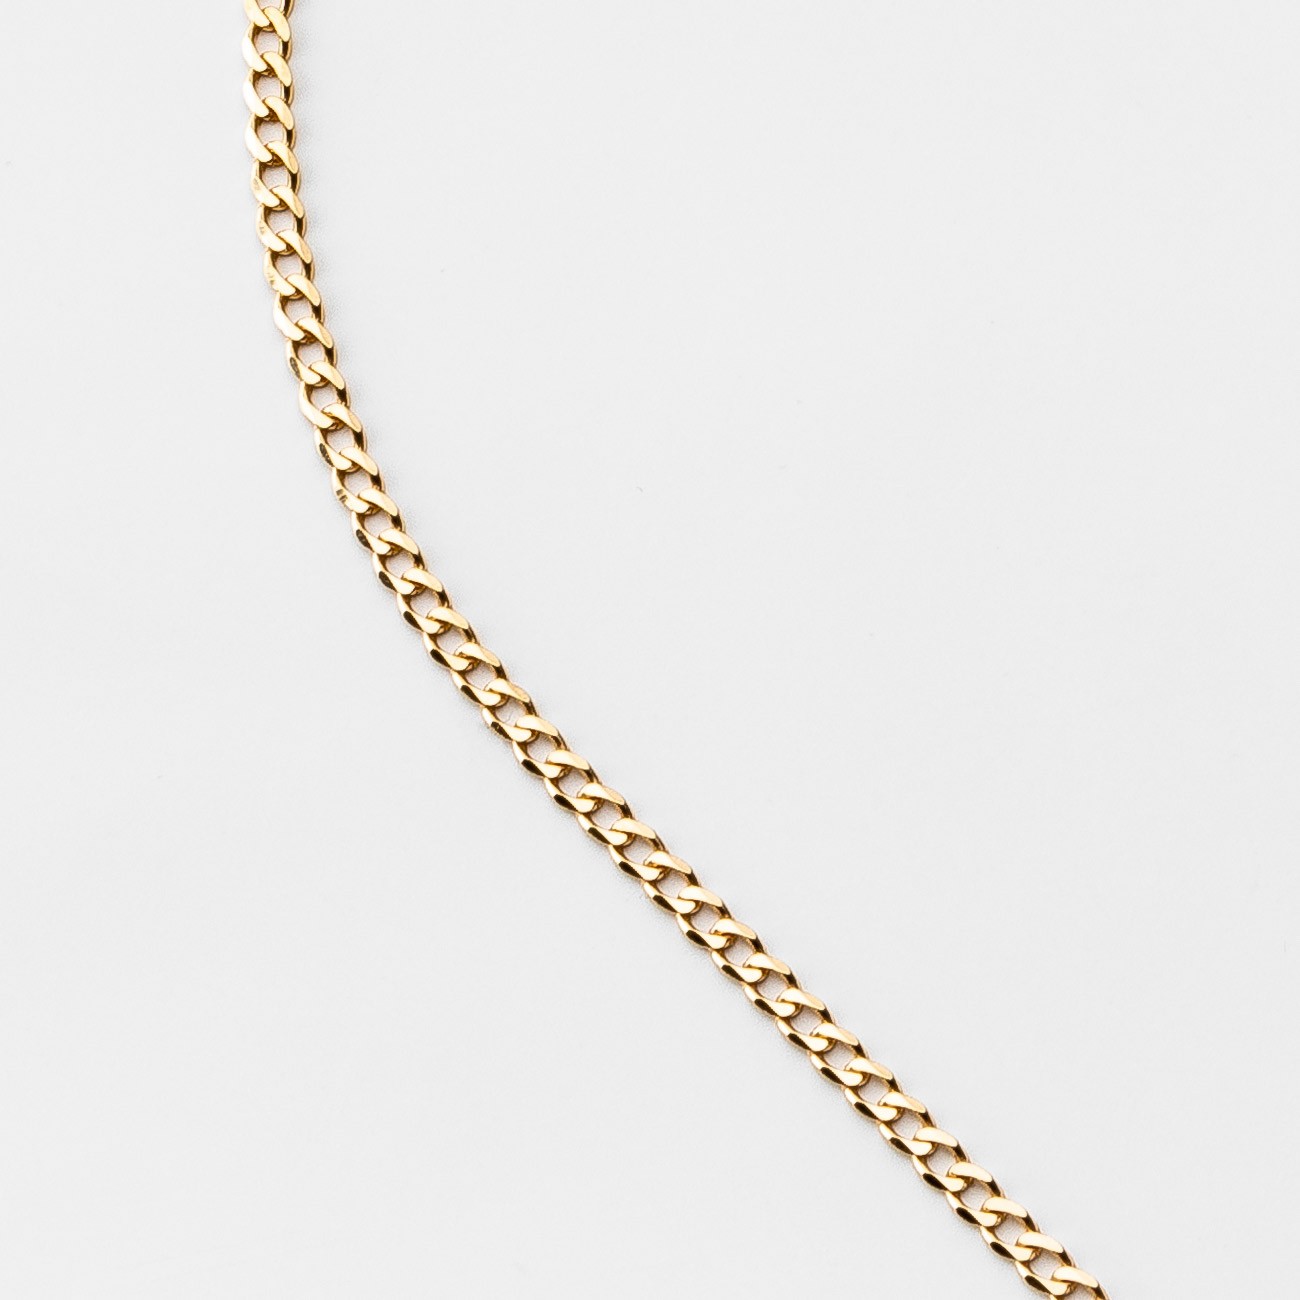 Rectangle pendant necklace curb chain 925